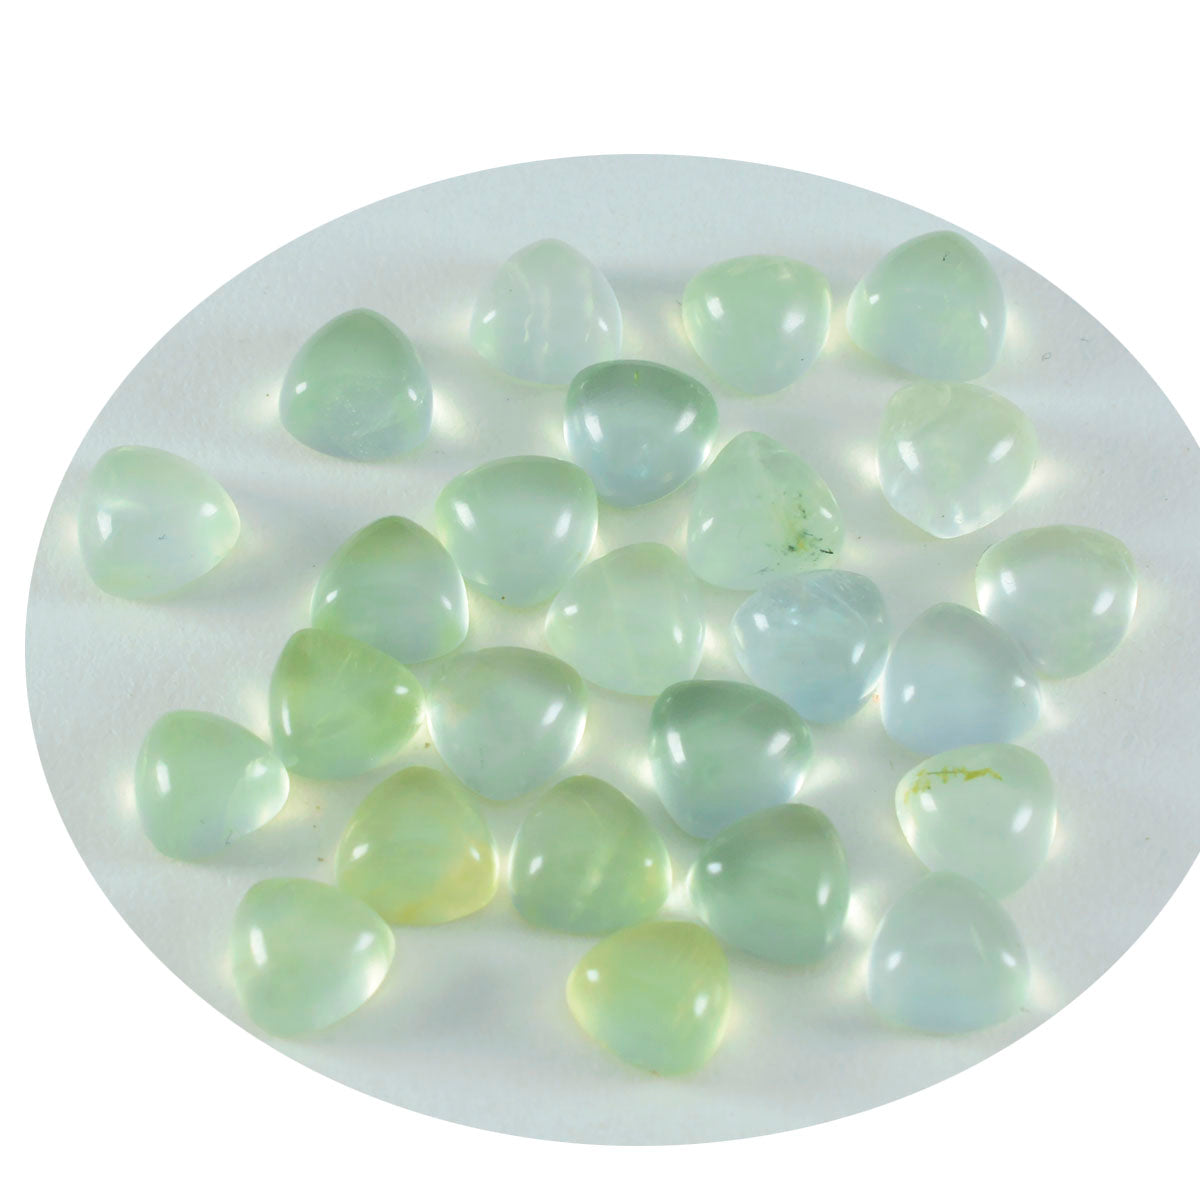 Riyogems 1PC Green Prehnite Cabochon 8x8 mm Trillion Shape lovely Quality Gems